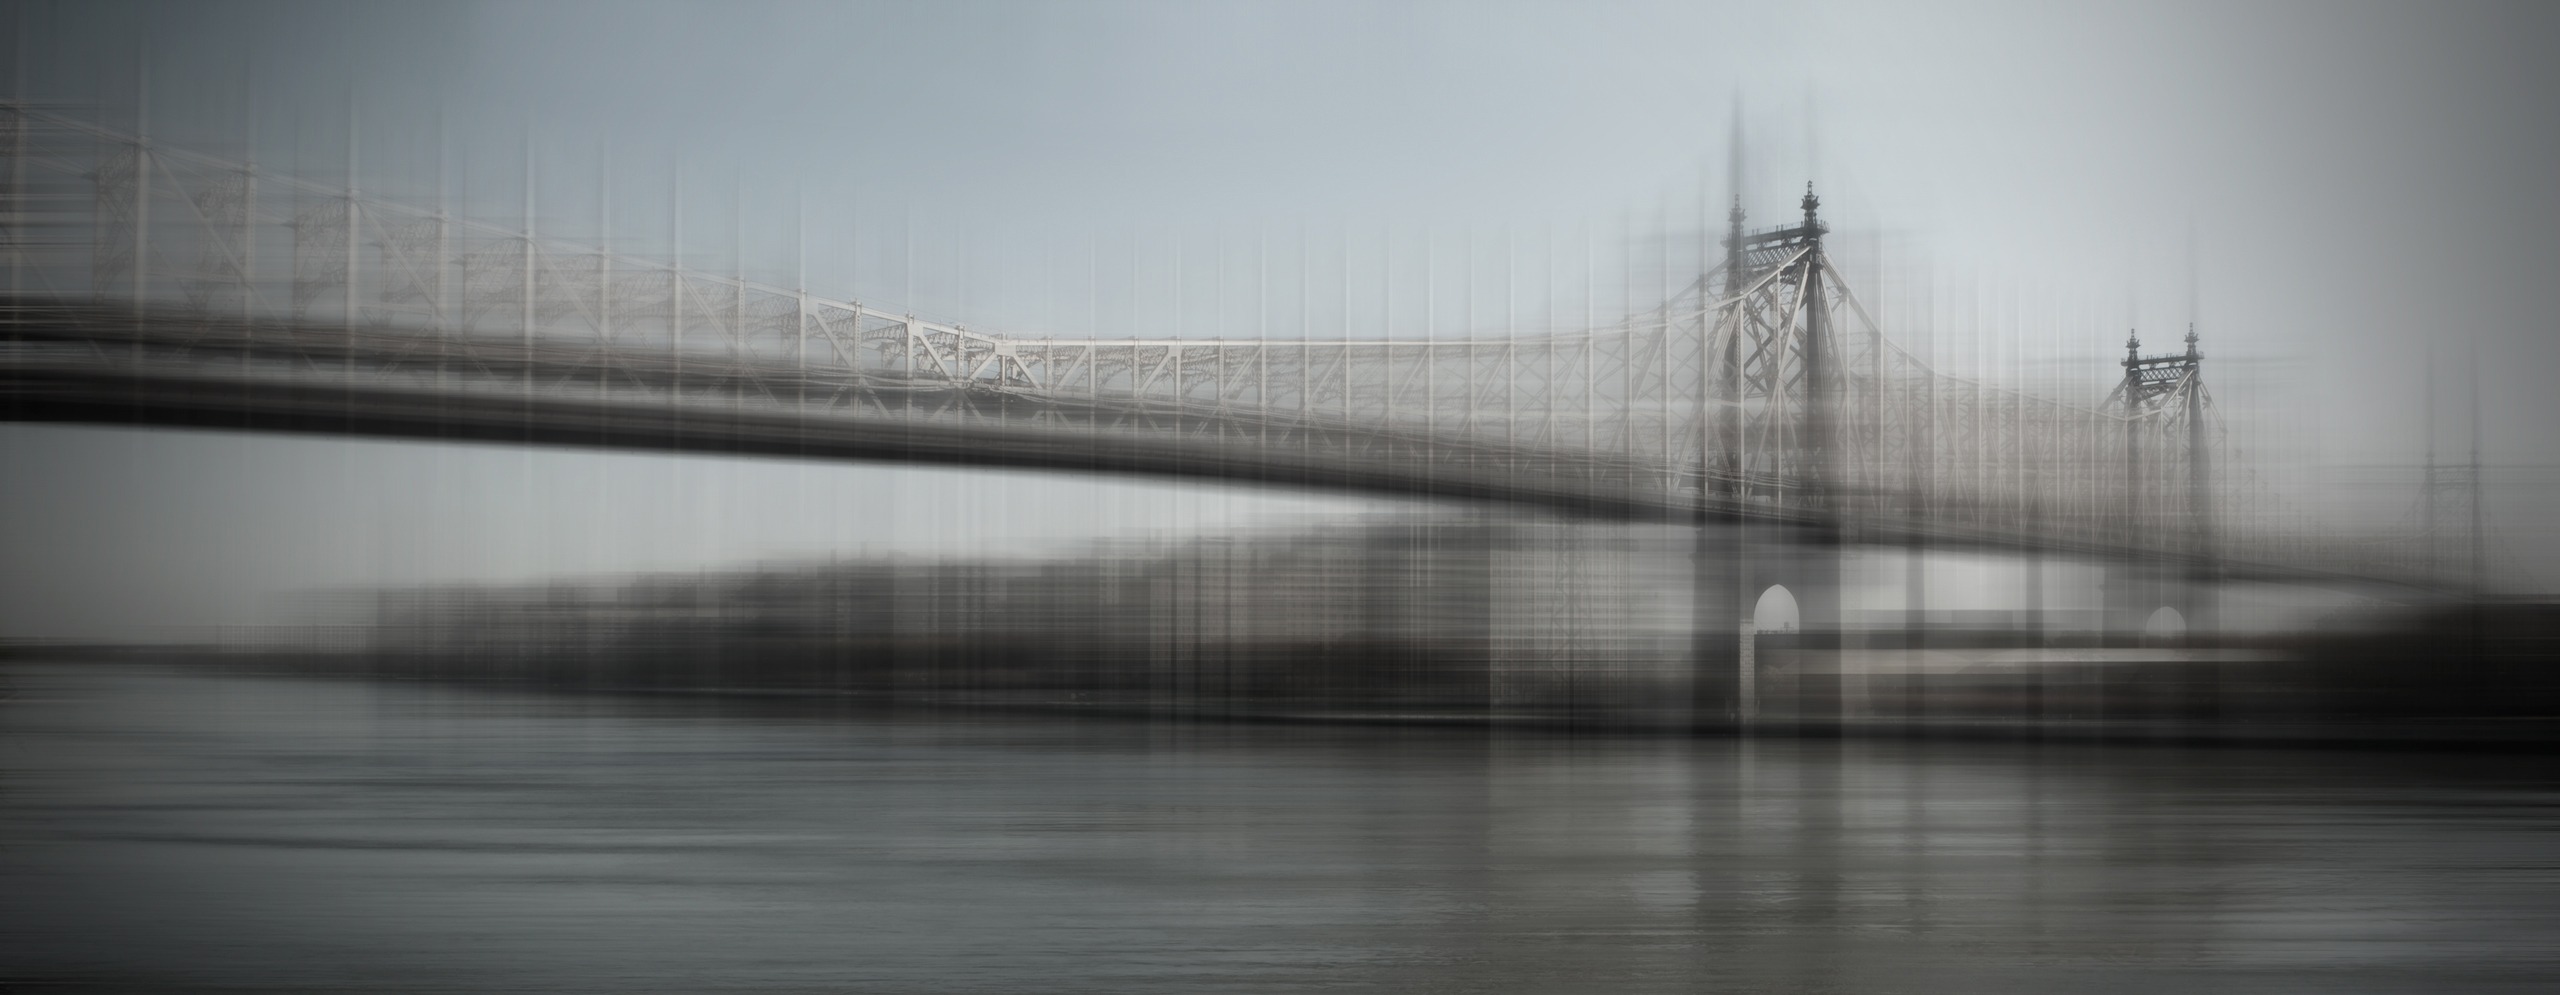 CITYscapes New York City - Queensboro Bridge